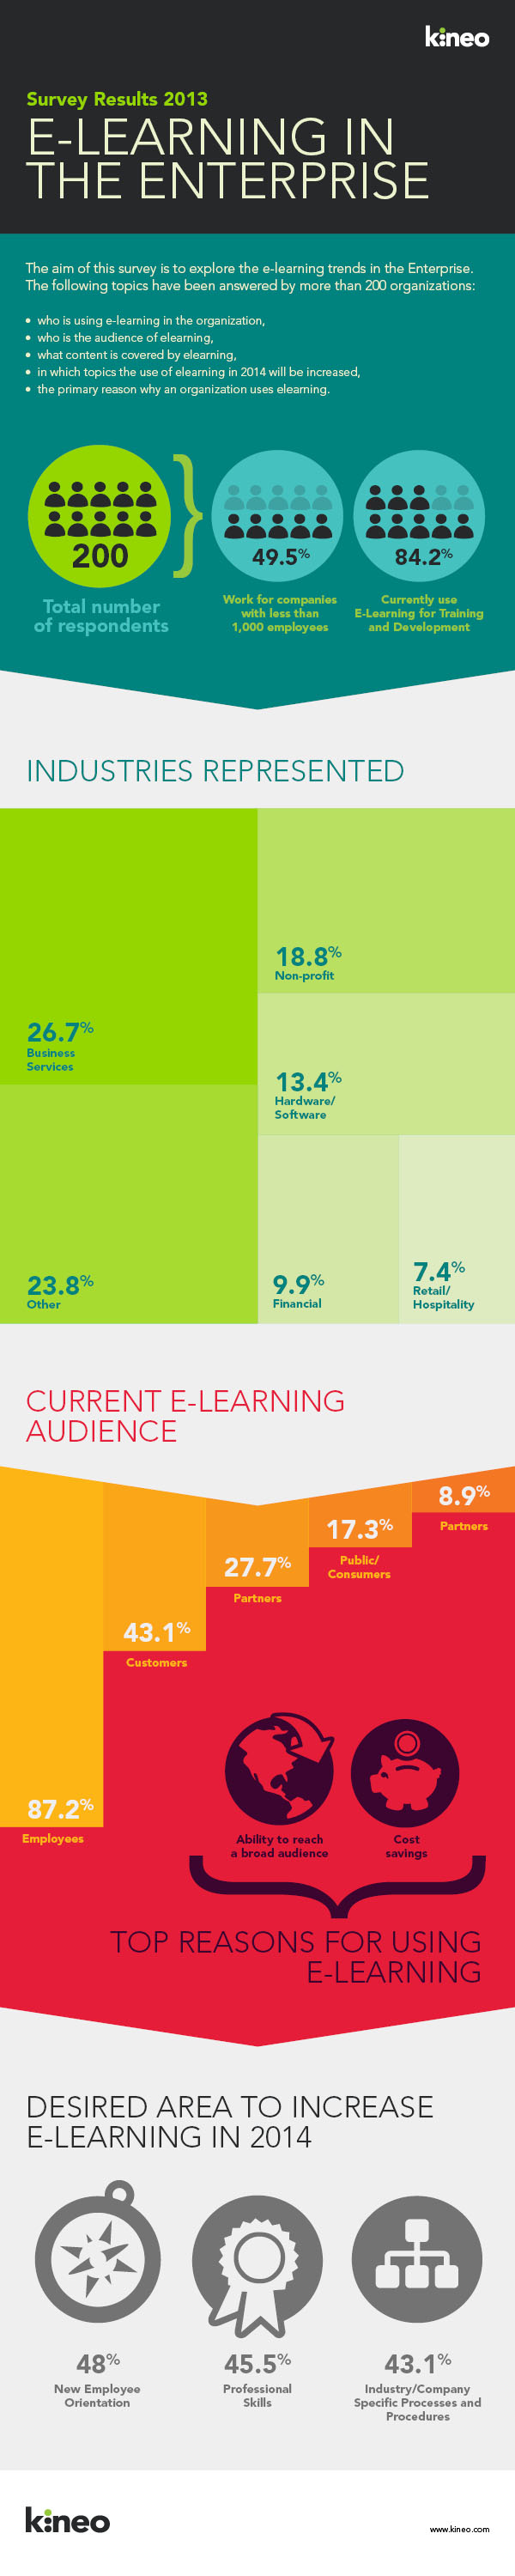 Tendeances e-learning